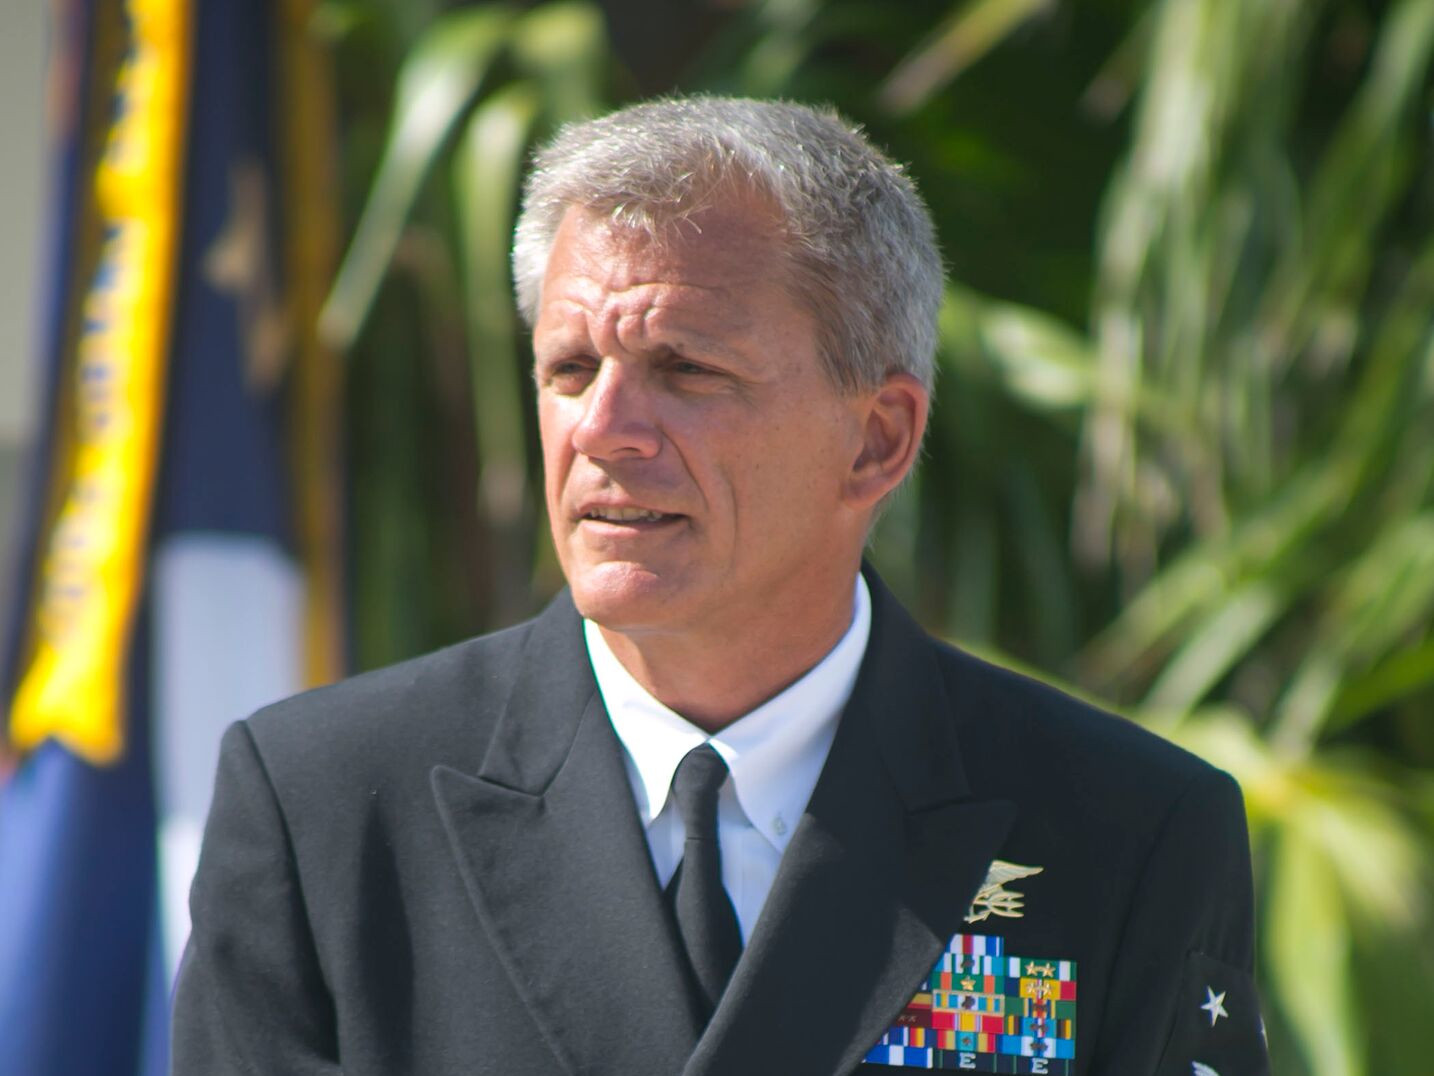 Navy SEAL Rick Kaiser